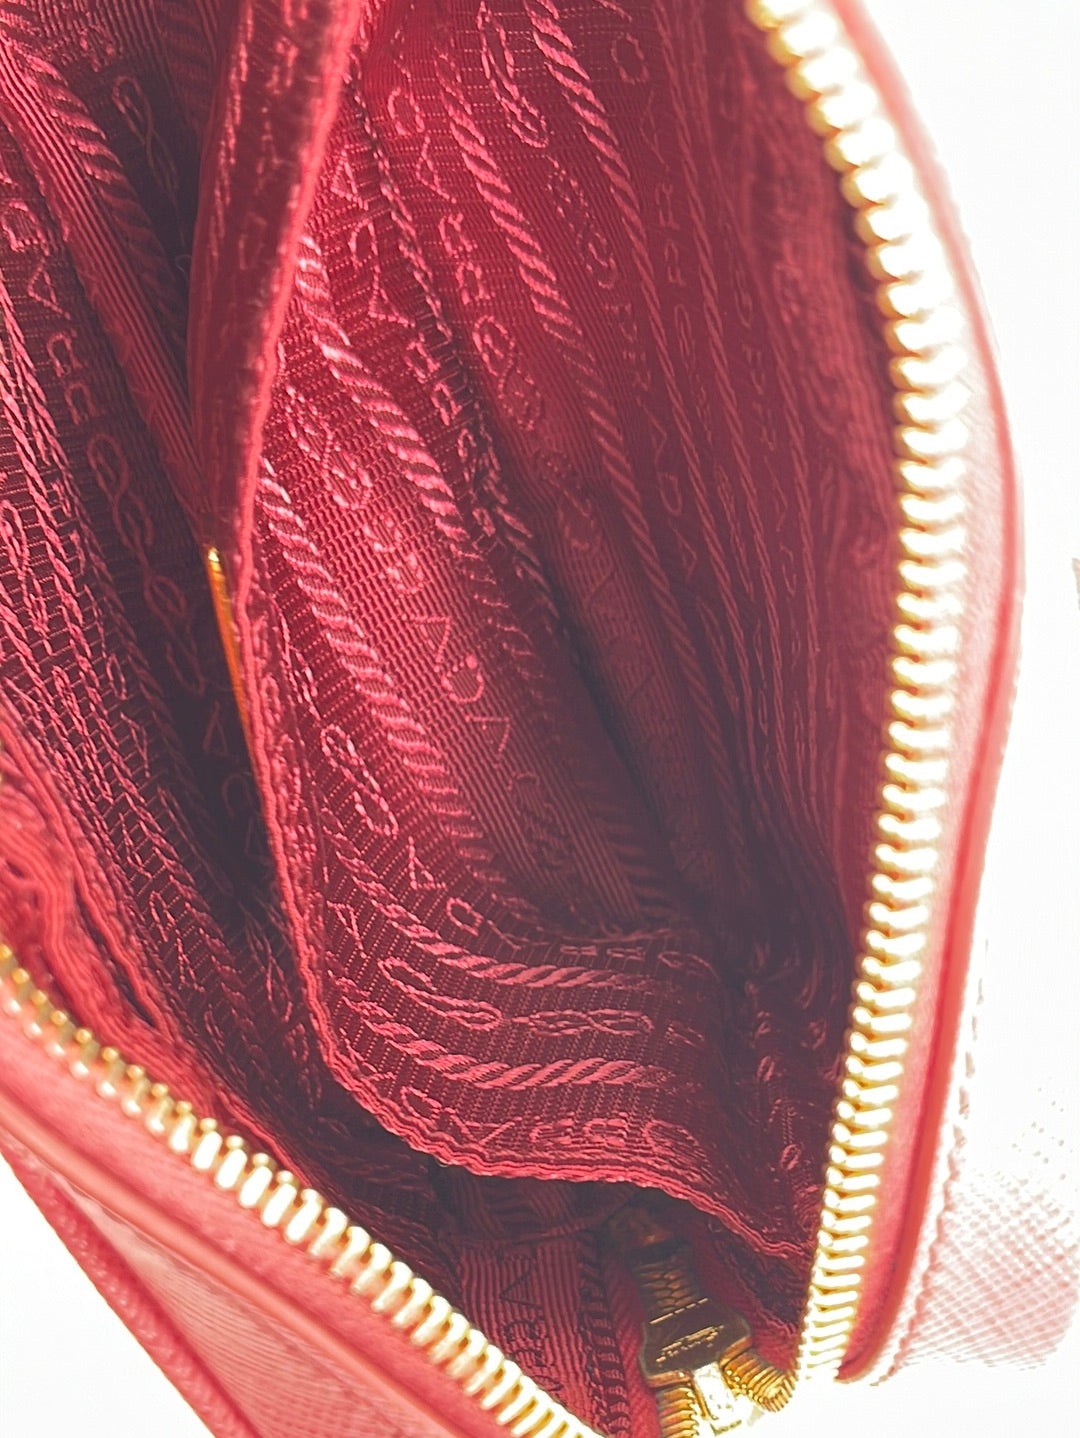 Preloved Prada Pink Saffiano Leather Crossbody Pouch 224 030623